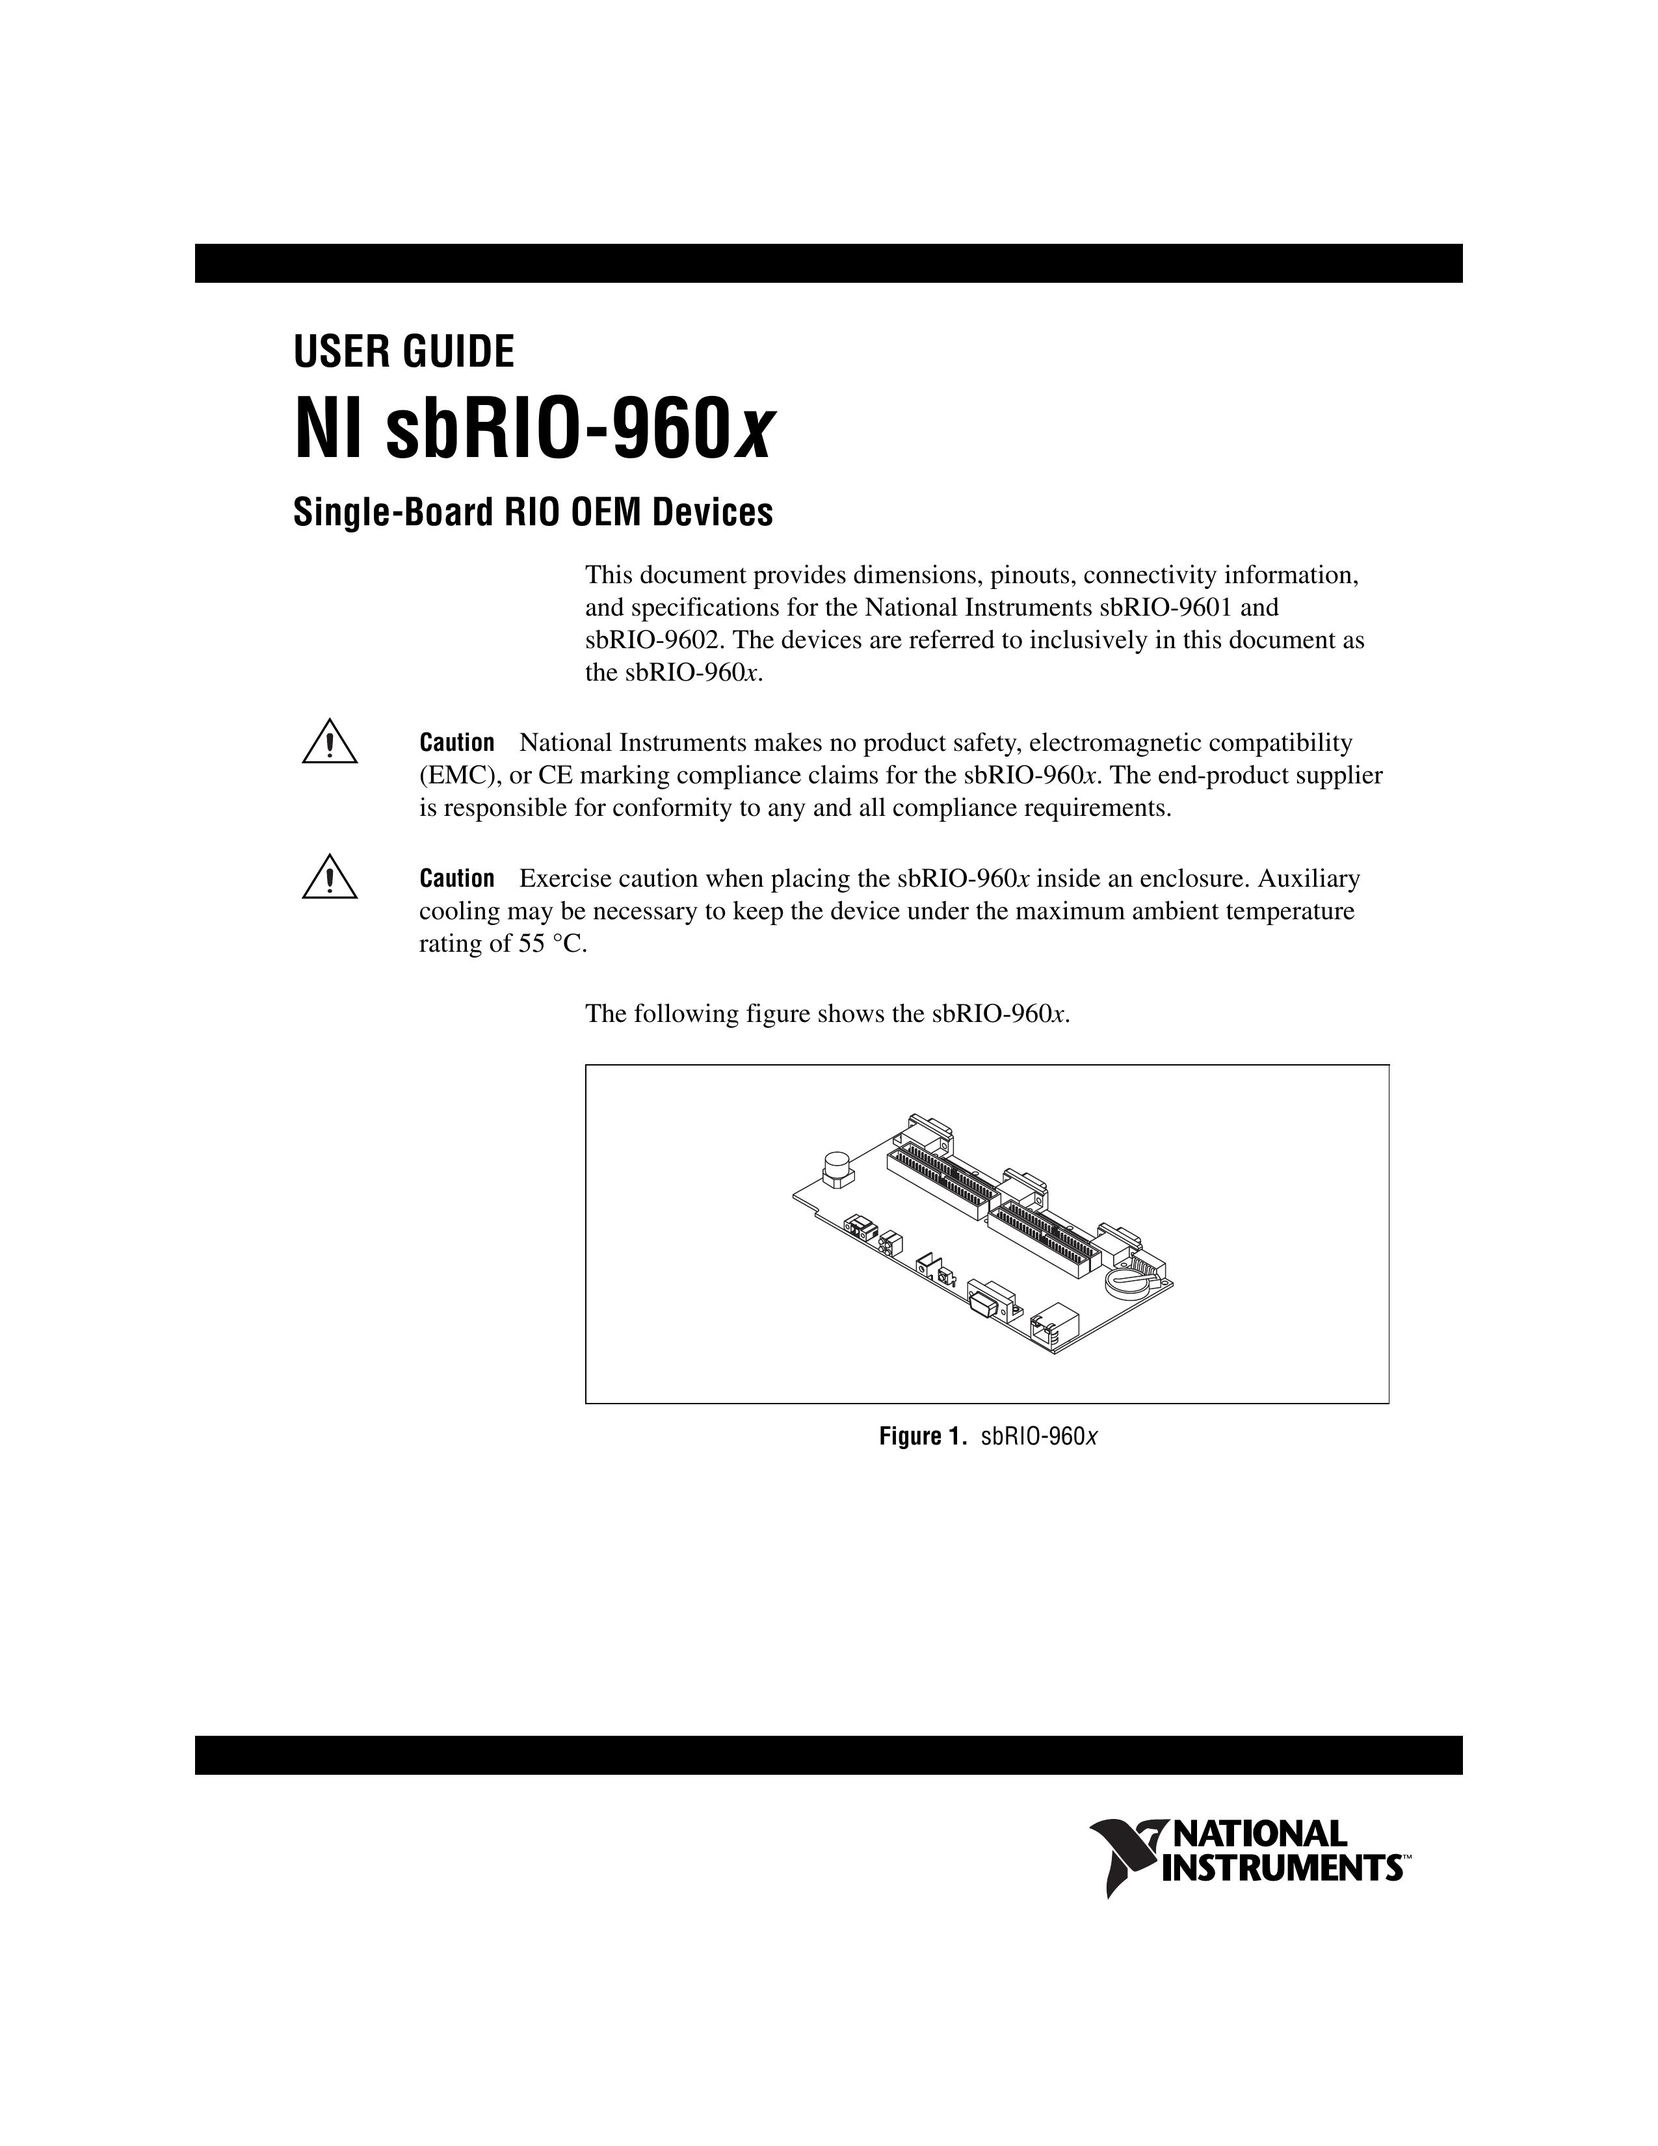 National Instruments NI sbRIO-960x Computer Hardware User Manual